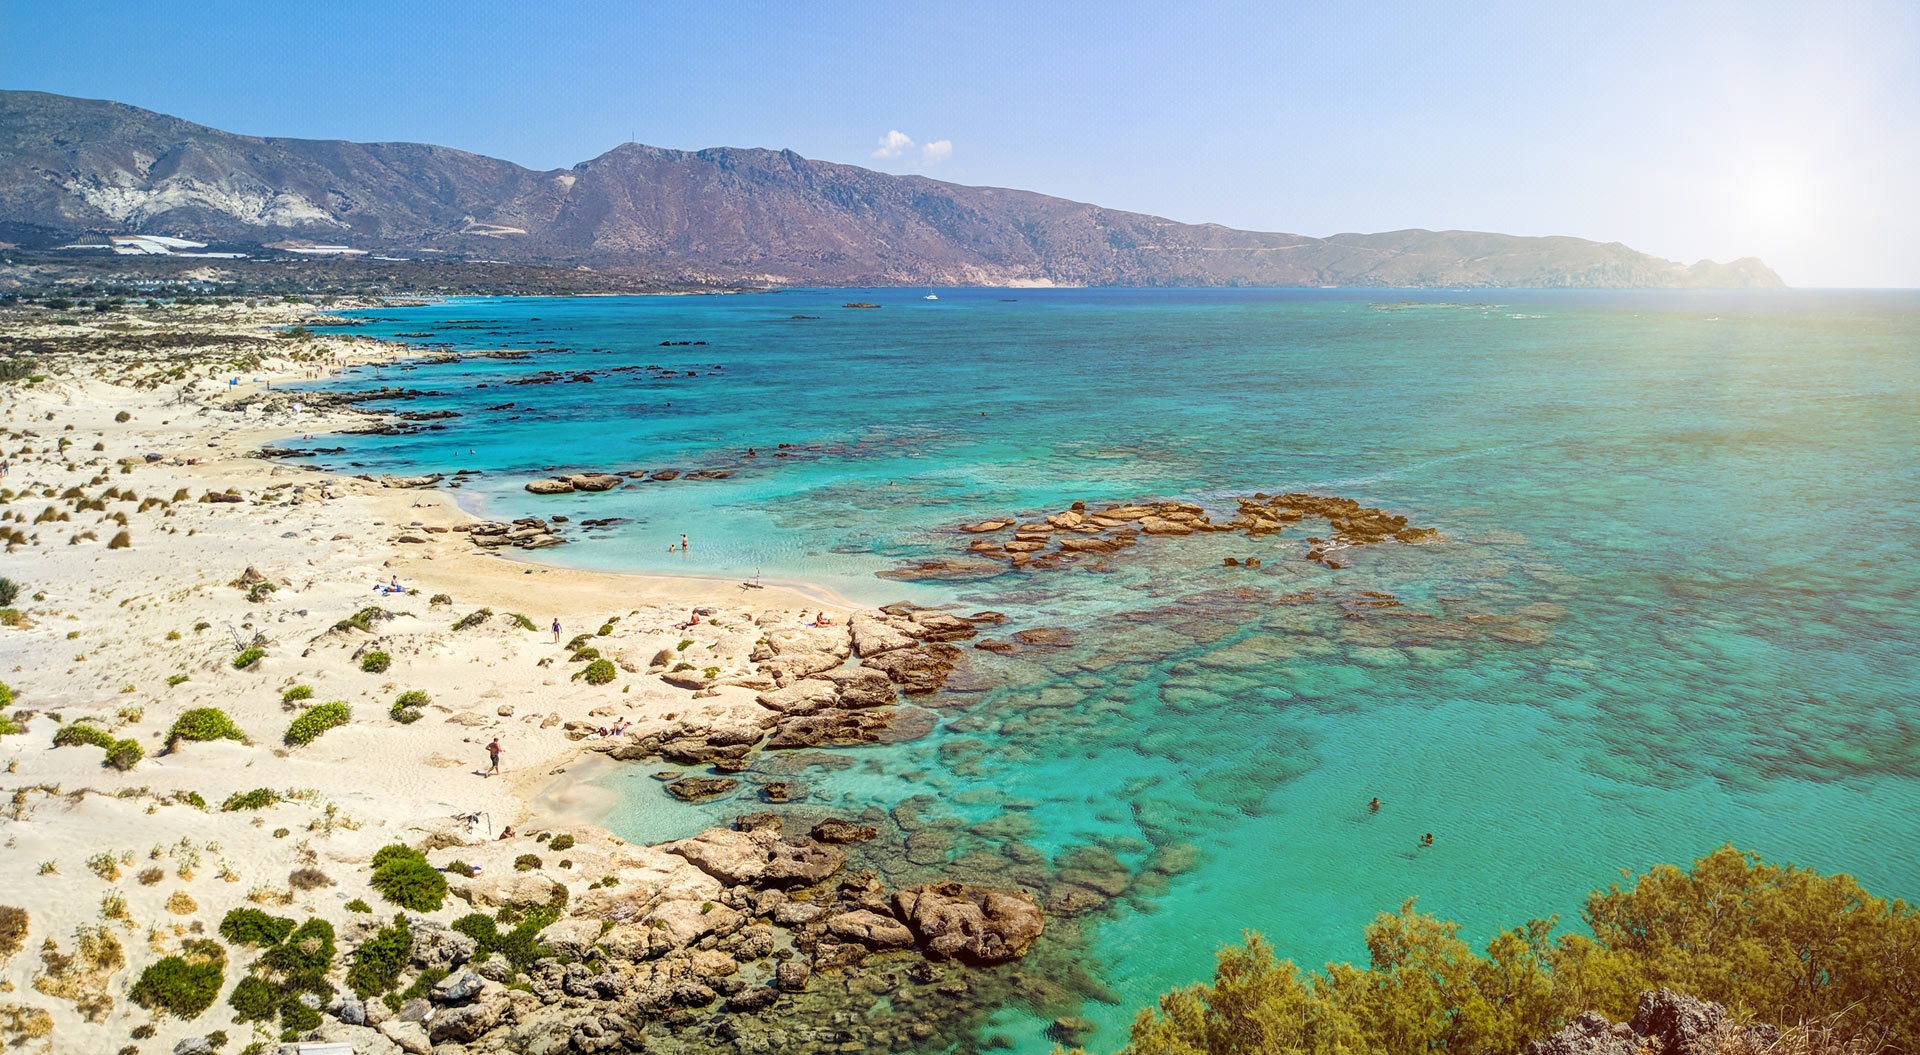 Elafonissi beach - a week in Crete itinerary